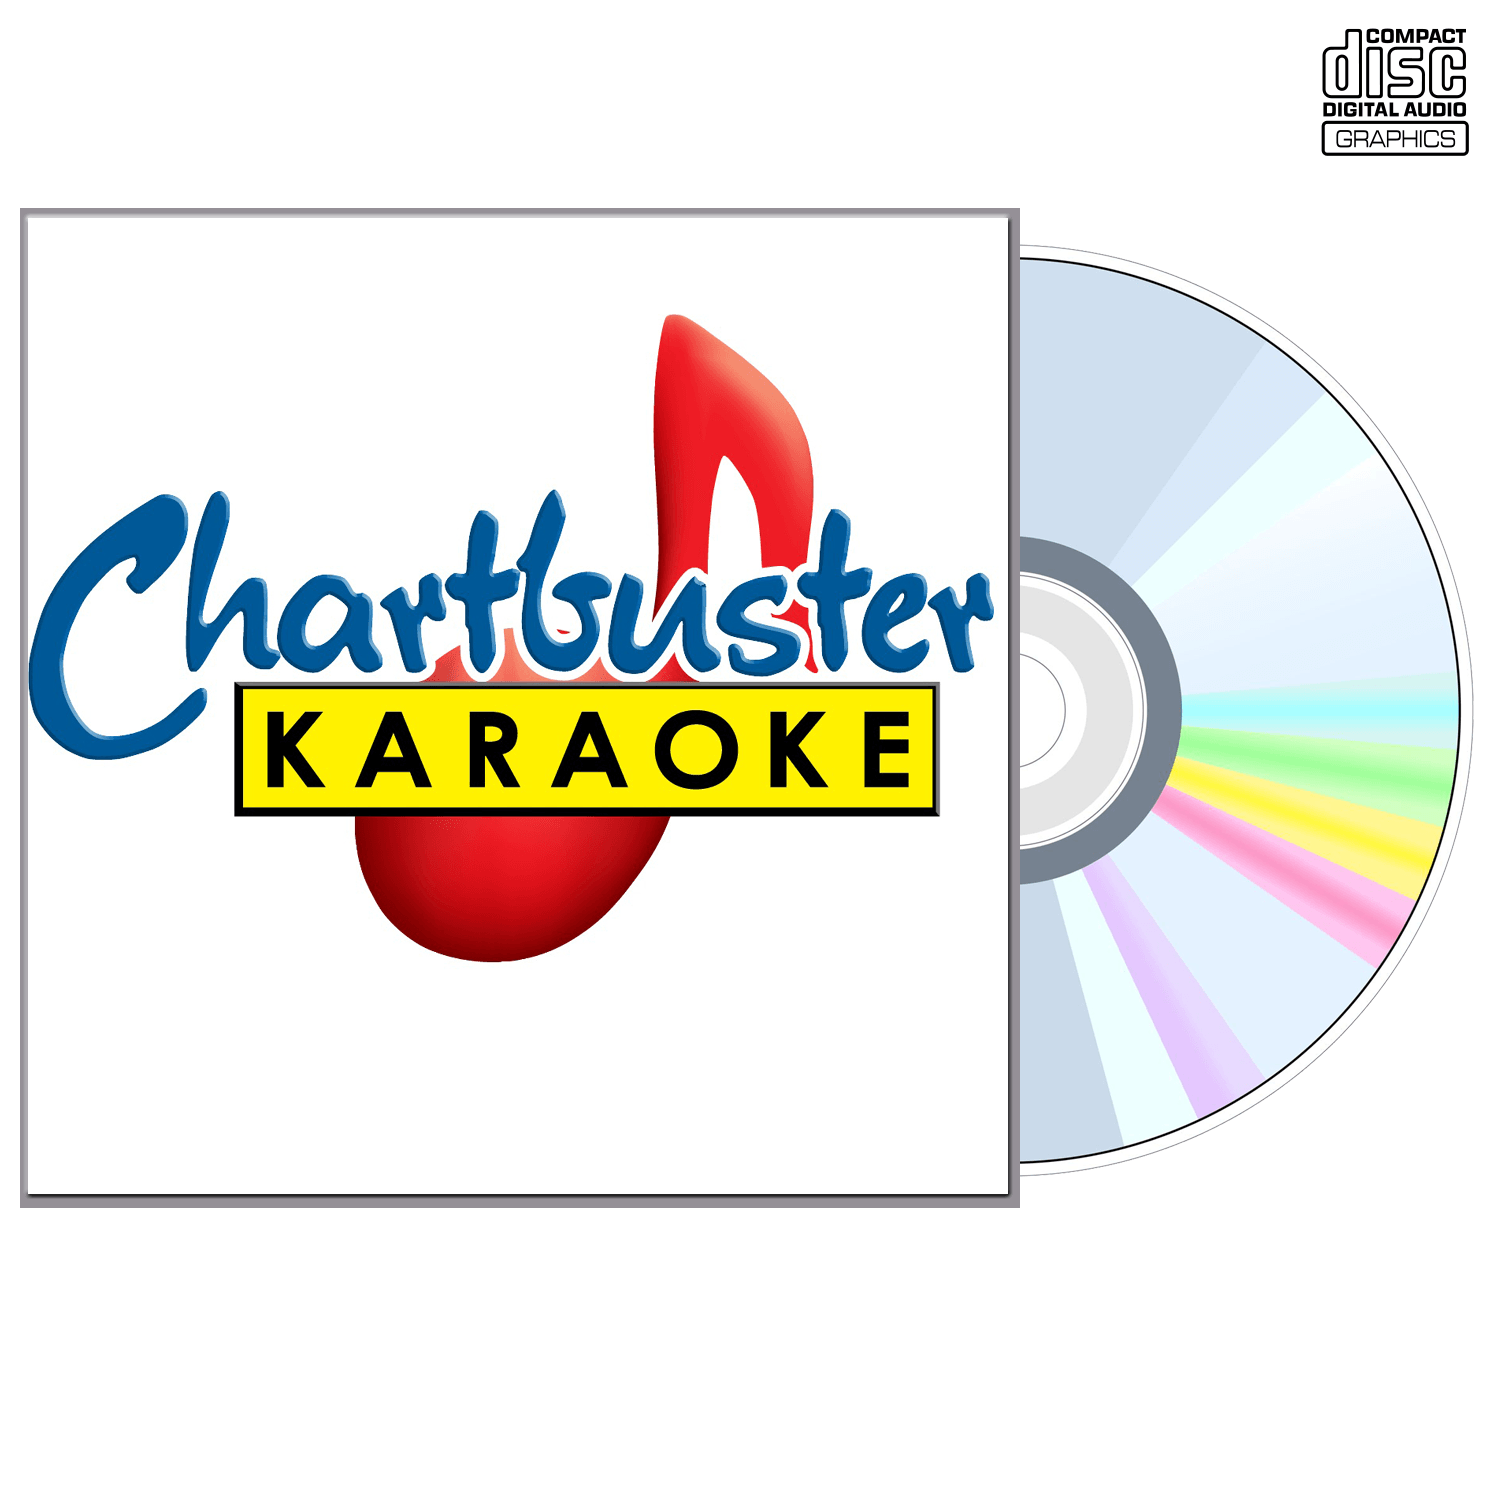 Vern Gosdin - CD+G - Chartbuster Karaoke - Karaoke Home Entertainment